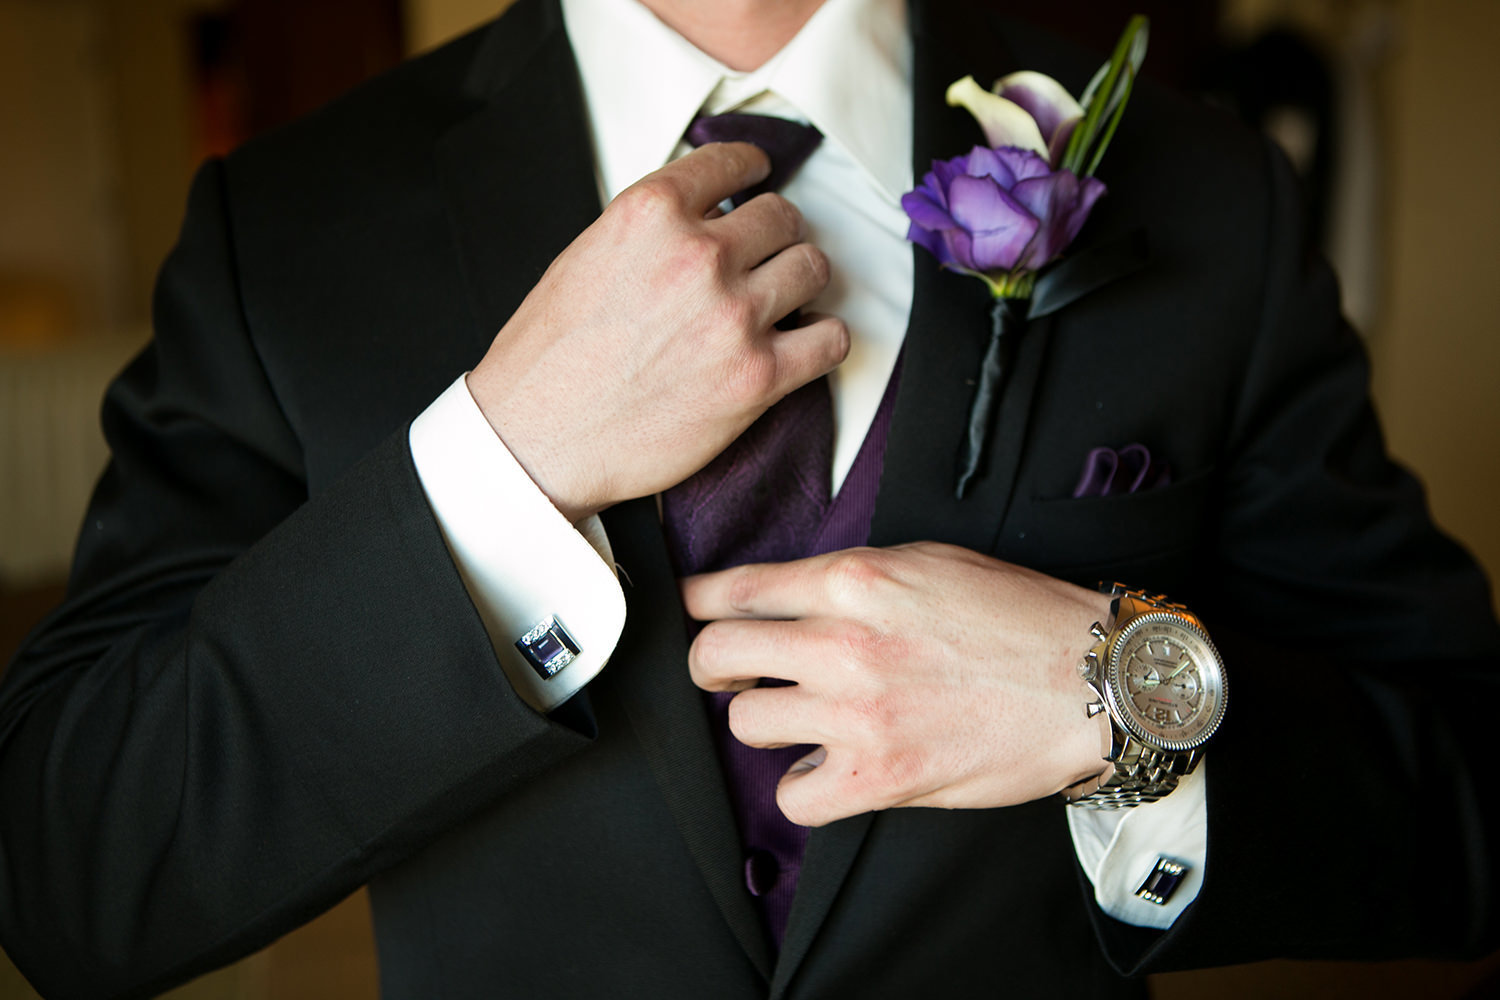 Detail photo of groom adjusting his tie before the wedding.